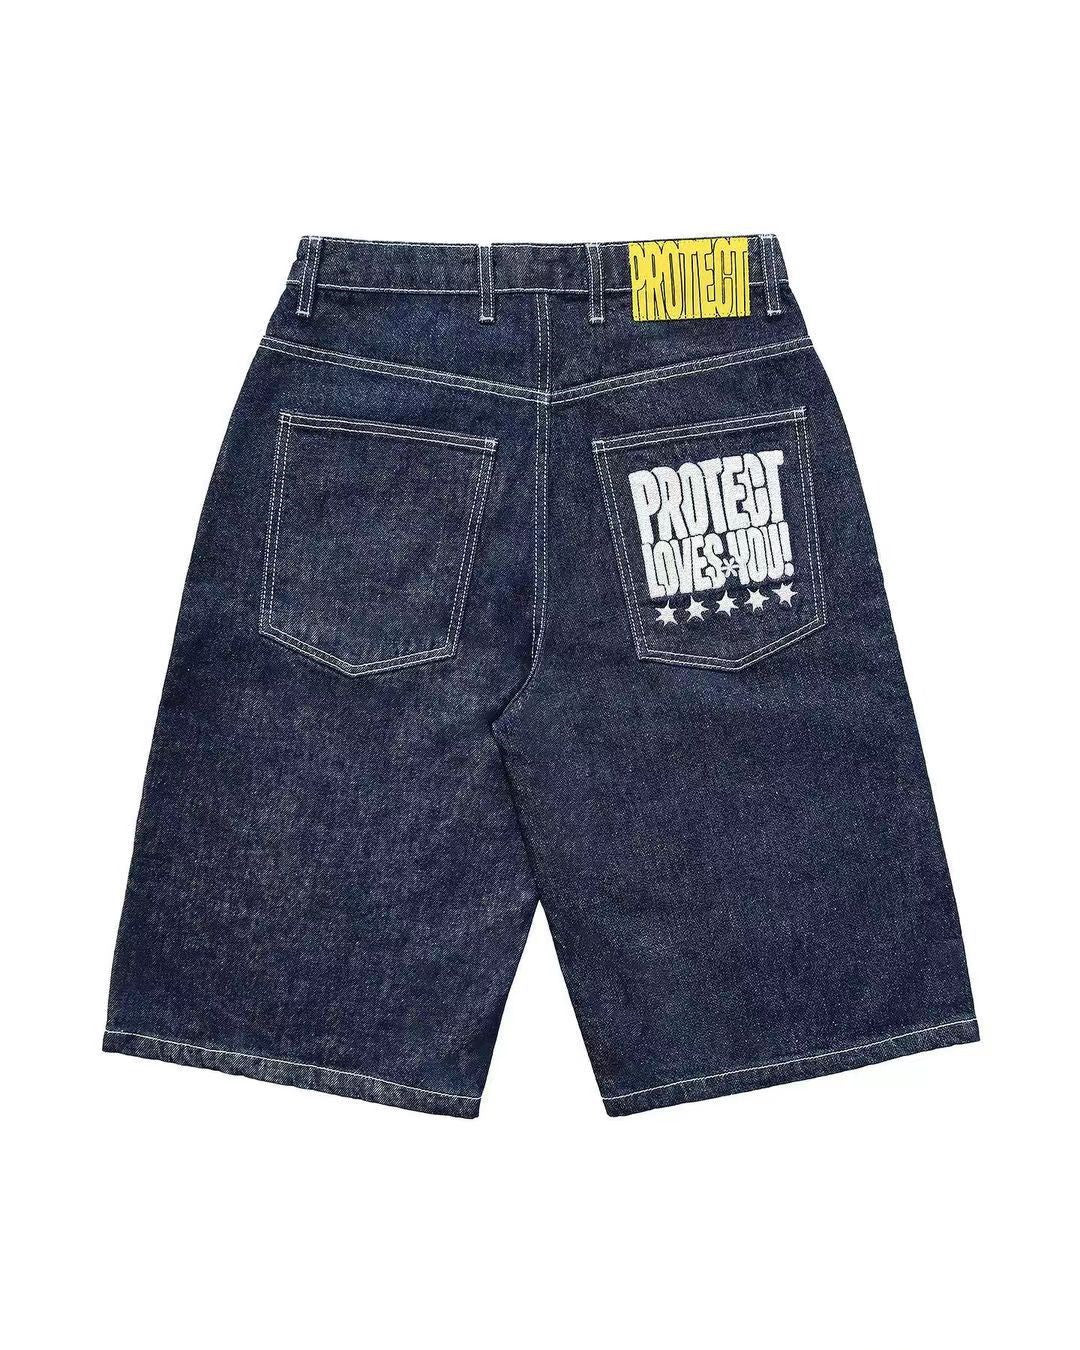 Men's Embroidery Dark Blue Denim Shorts - Stylish, Comfortable - - Men's Jeans - Carvan Mart